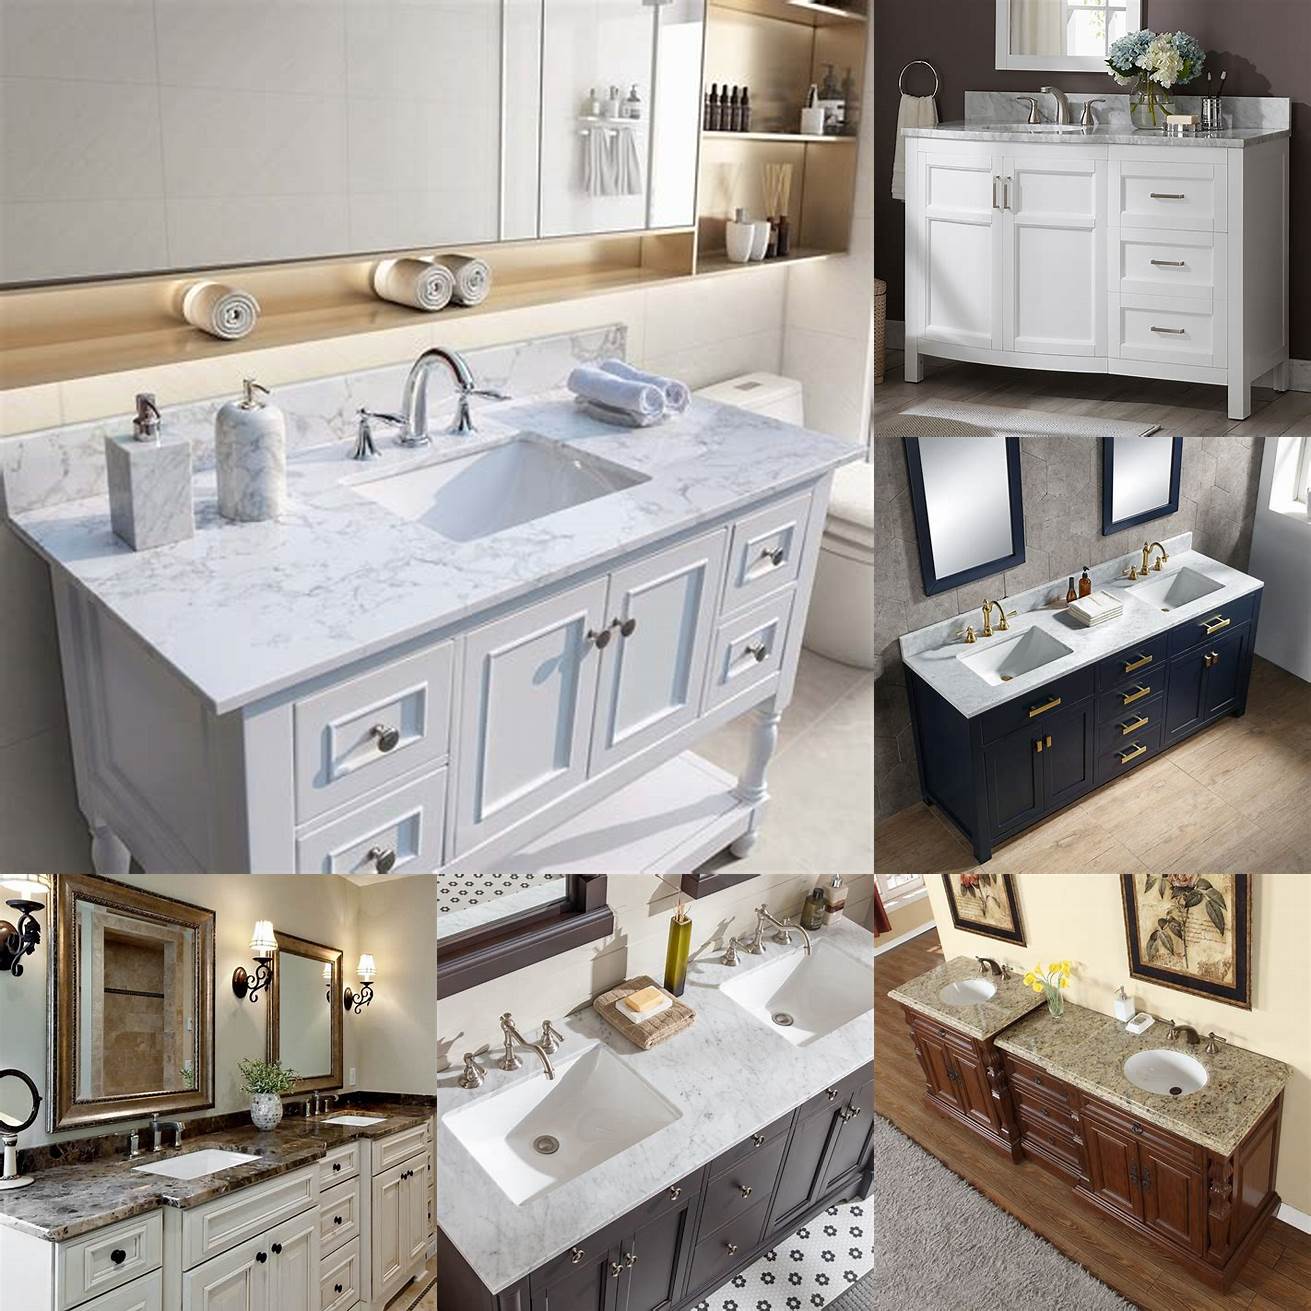 3 Double sink vanity with marble countertops